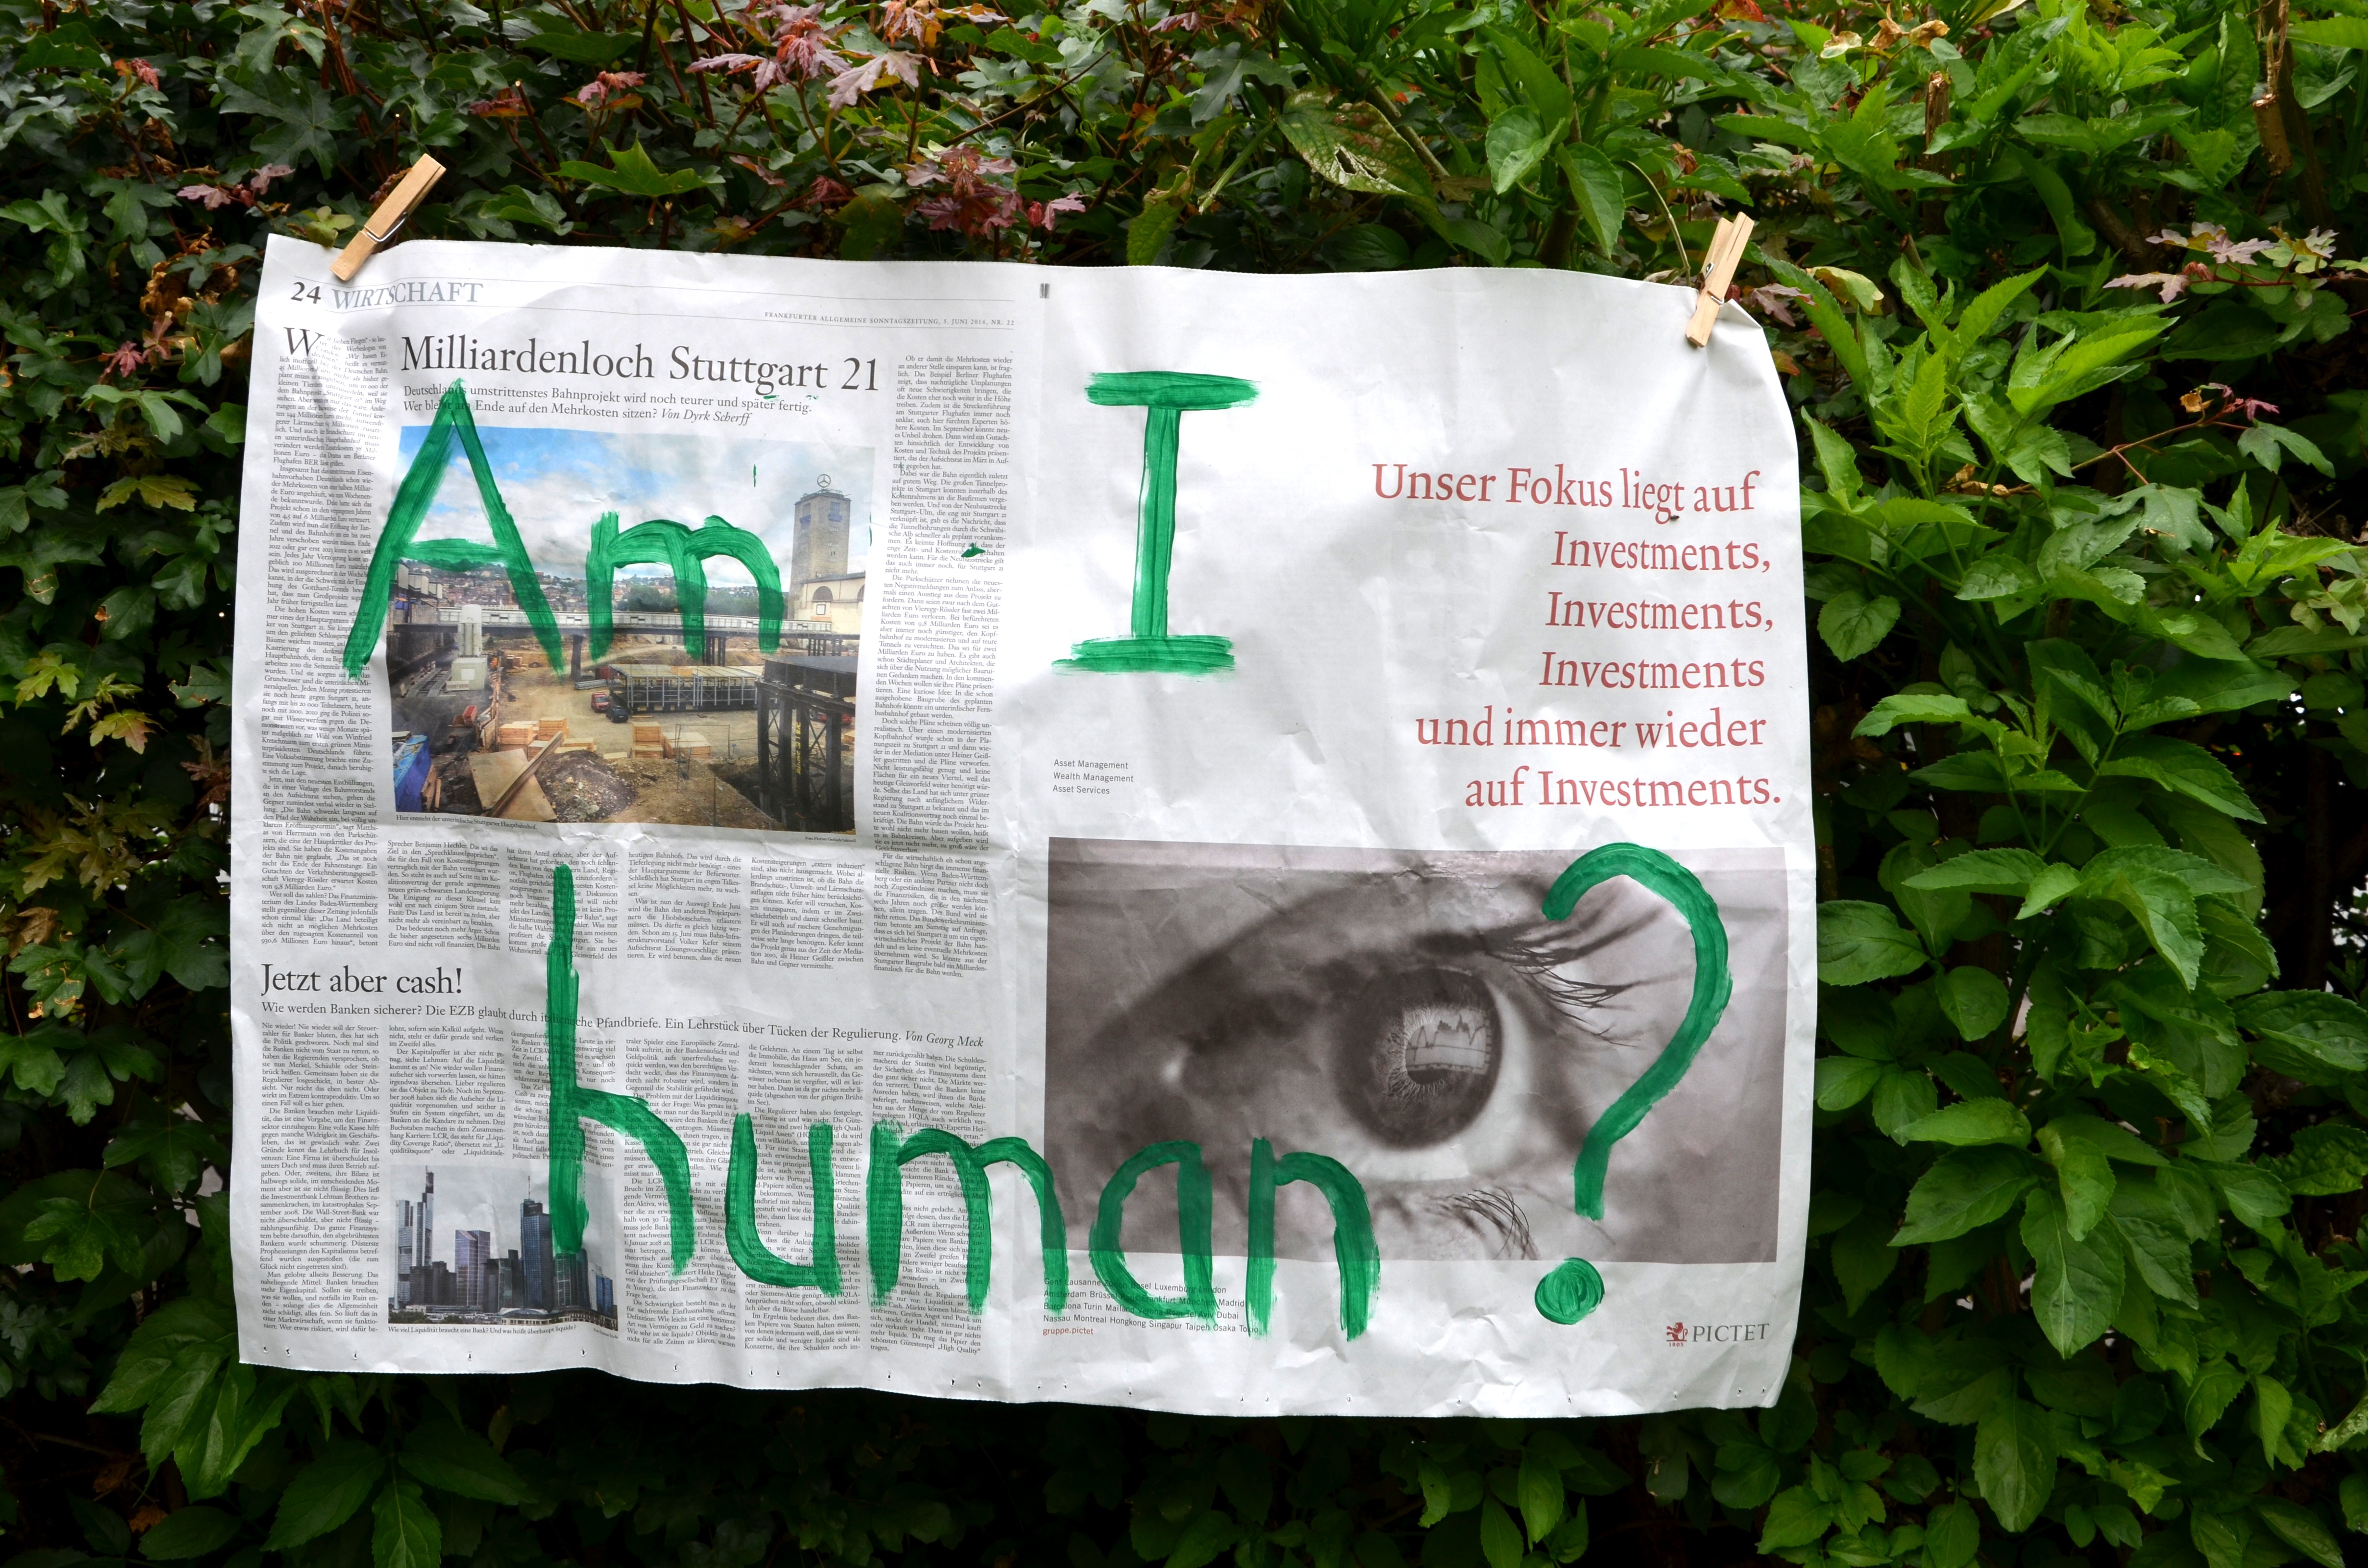 Am I human?